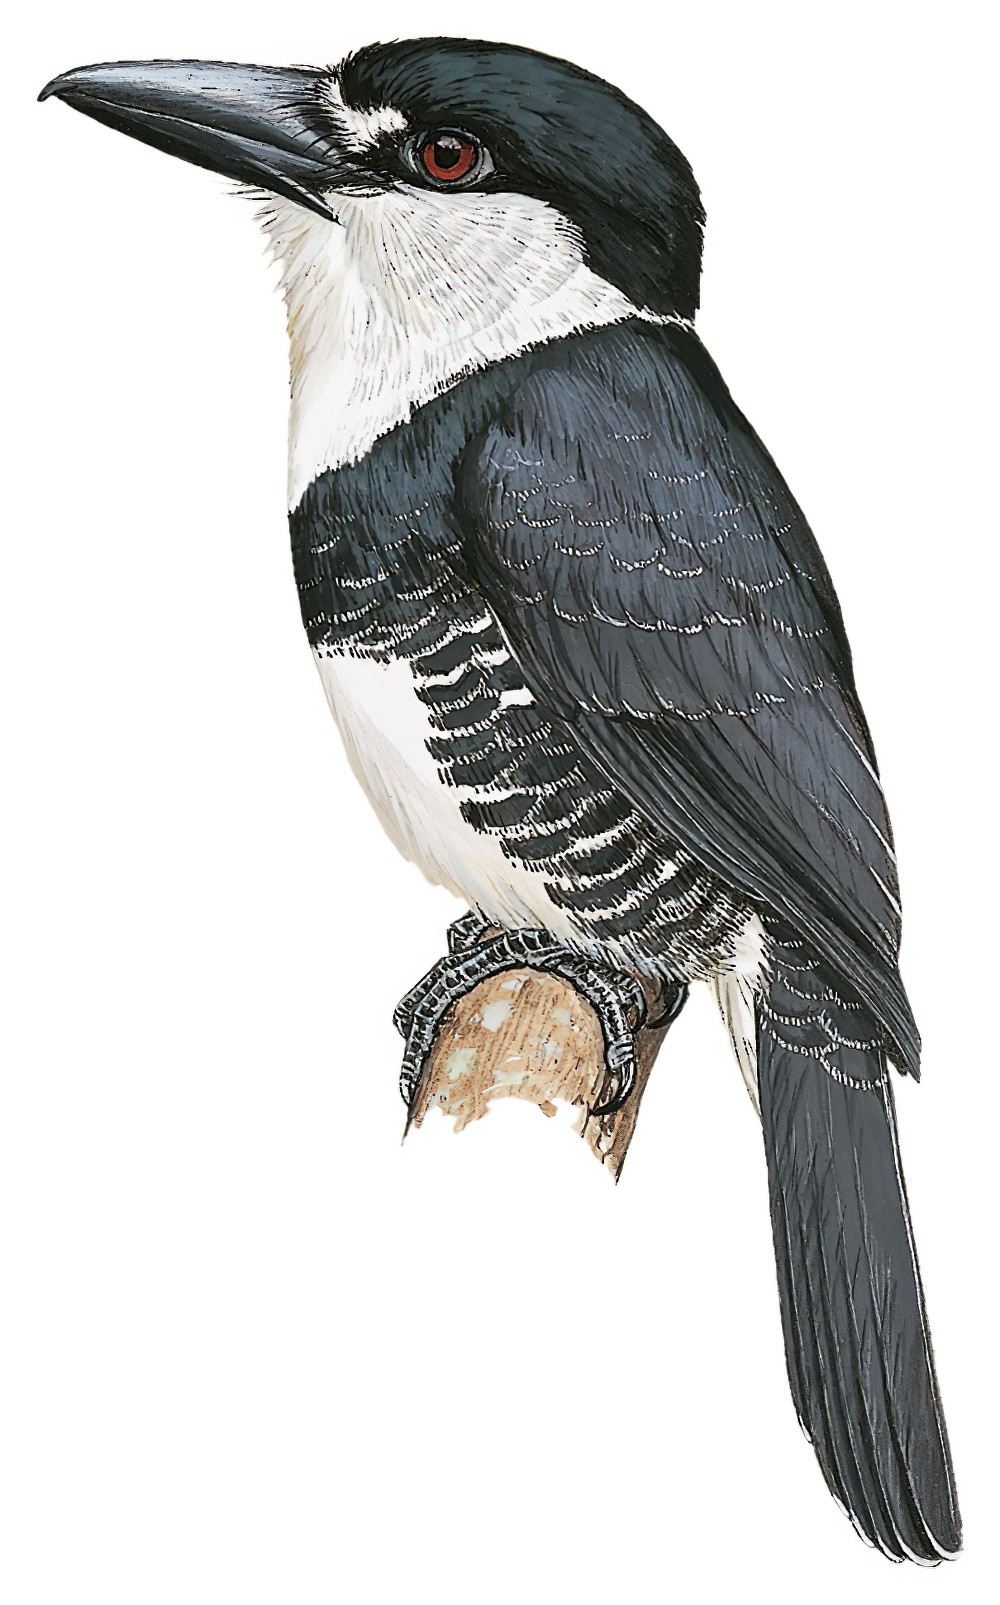 Guianan Puffbird / Notharchus macrorhynchos